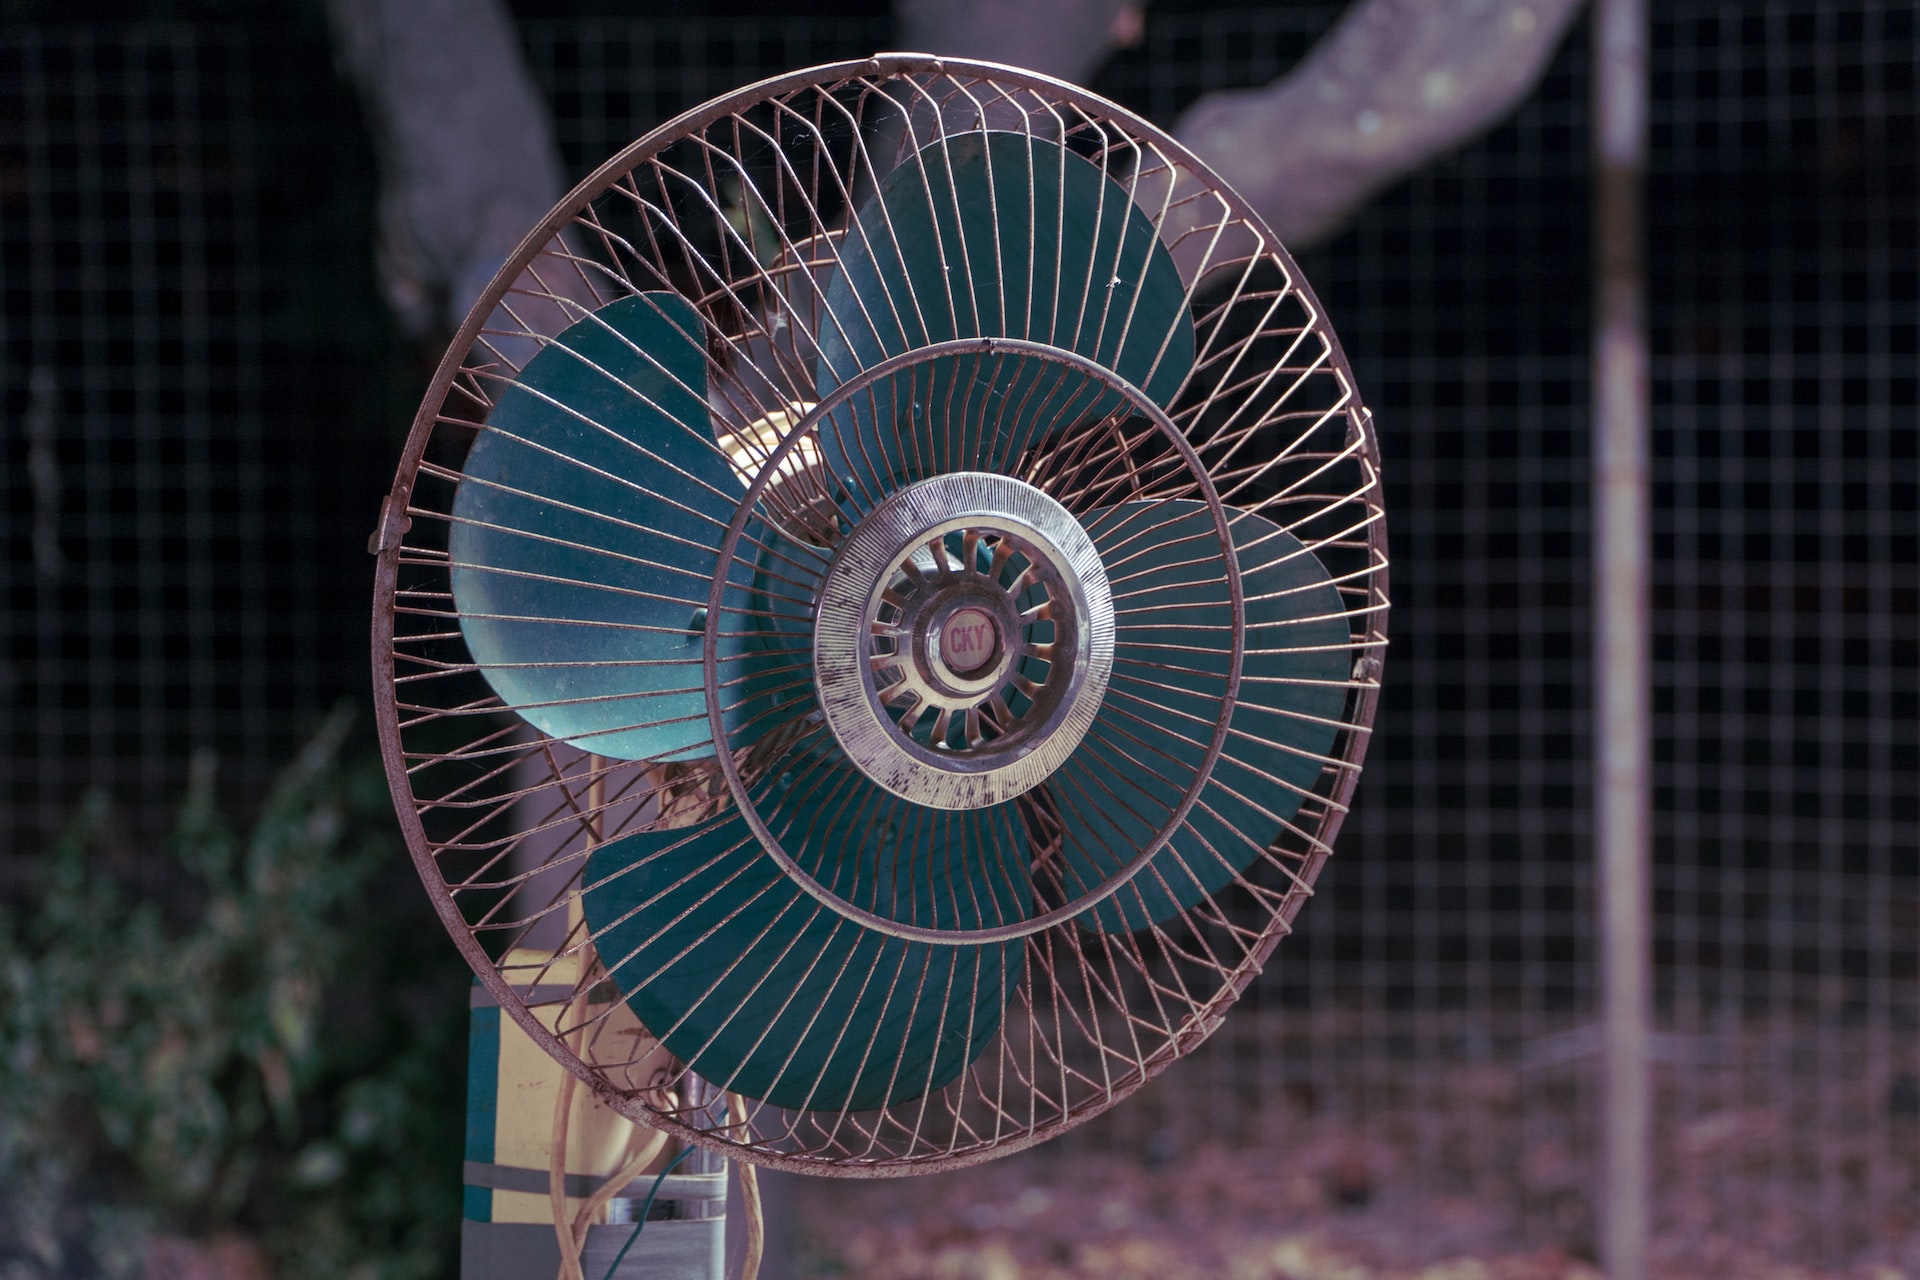 Using fan during heat wave